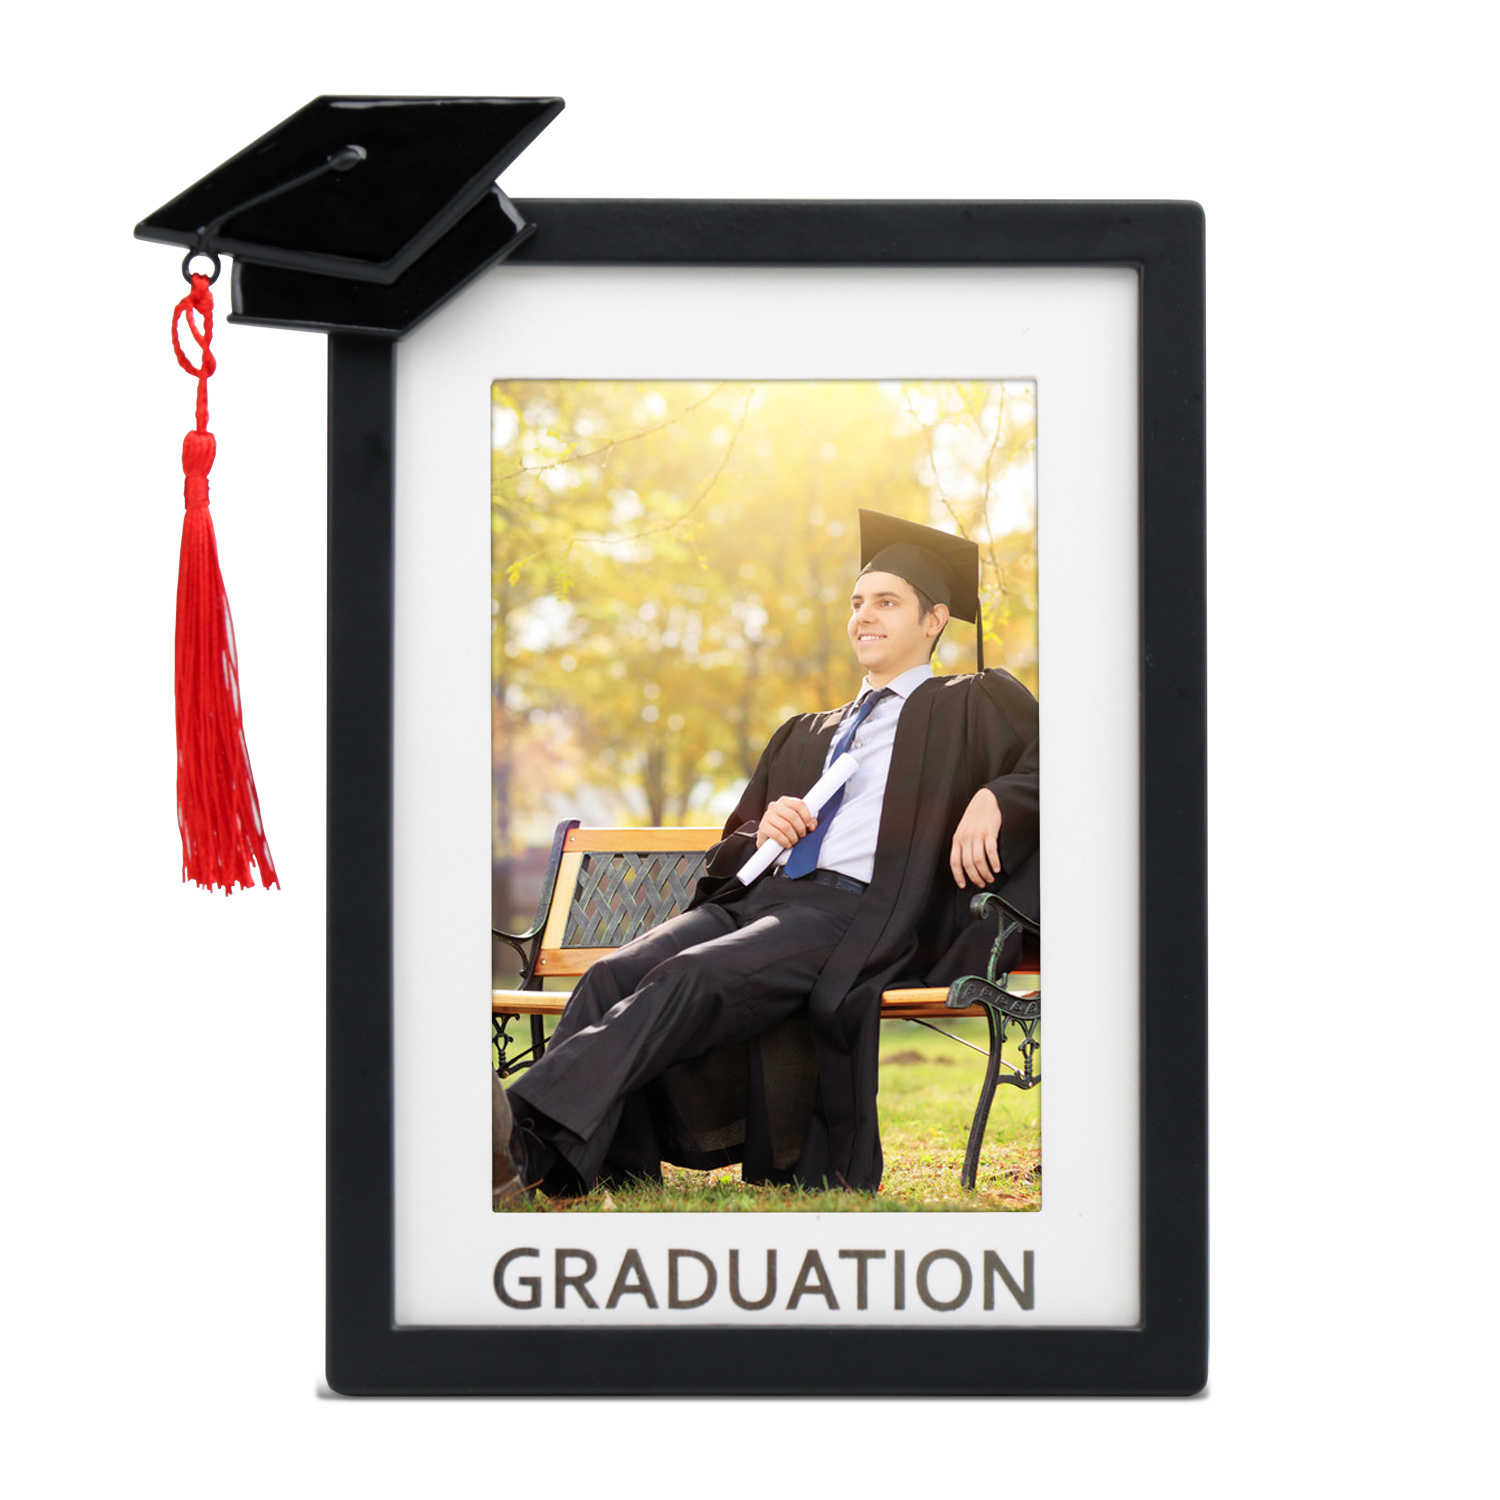 Graduation photo frame